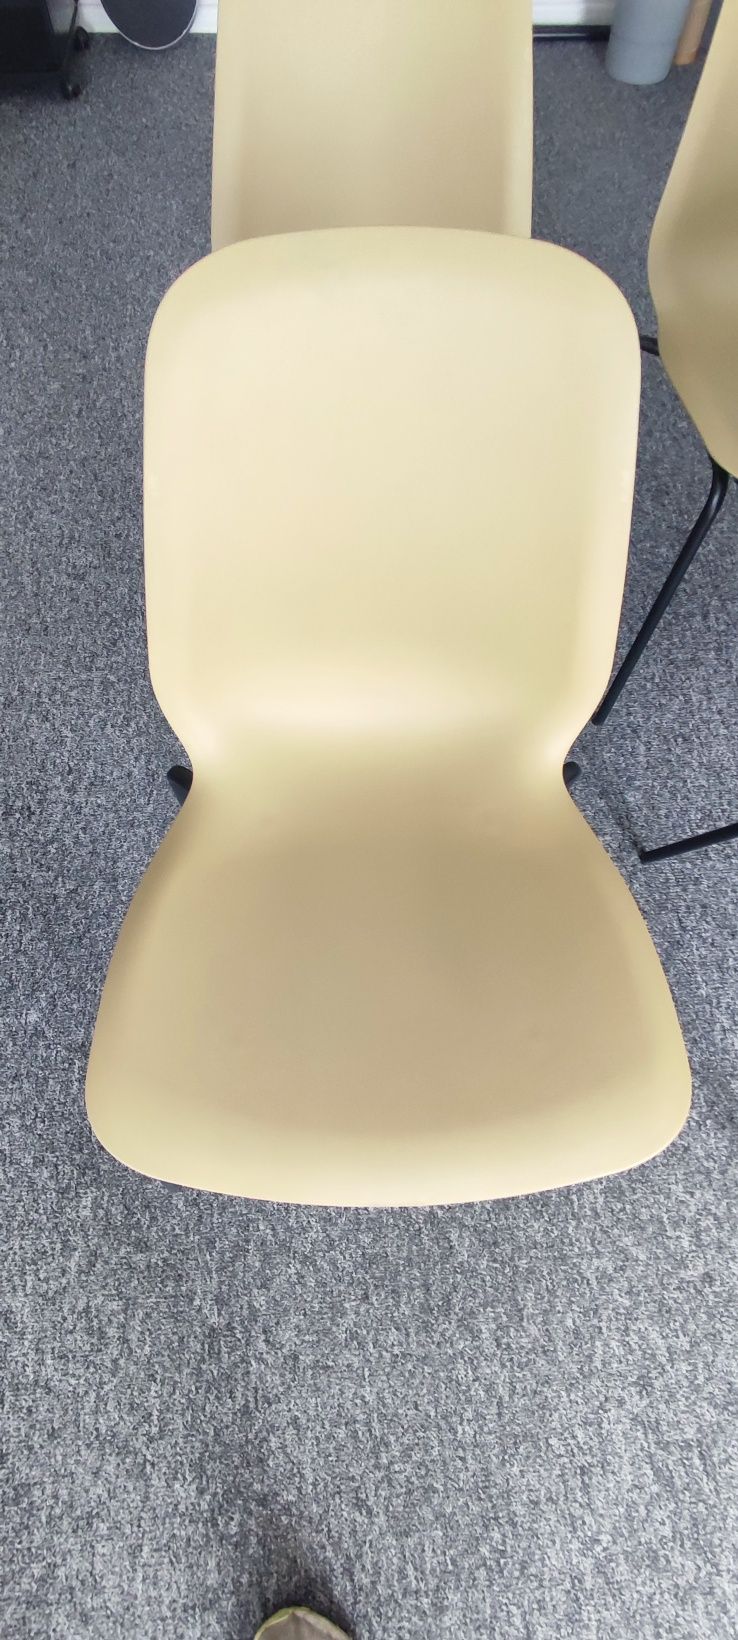 4 sztuki krzesełka ikea leifarne